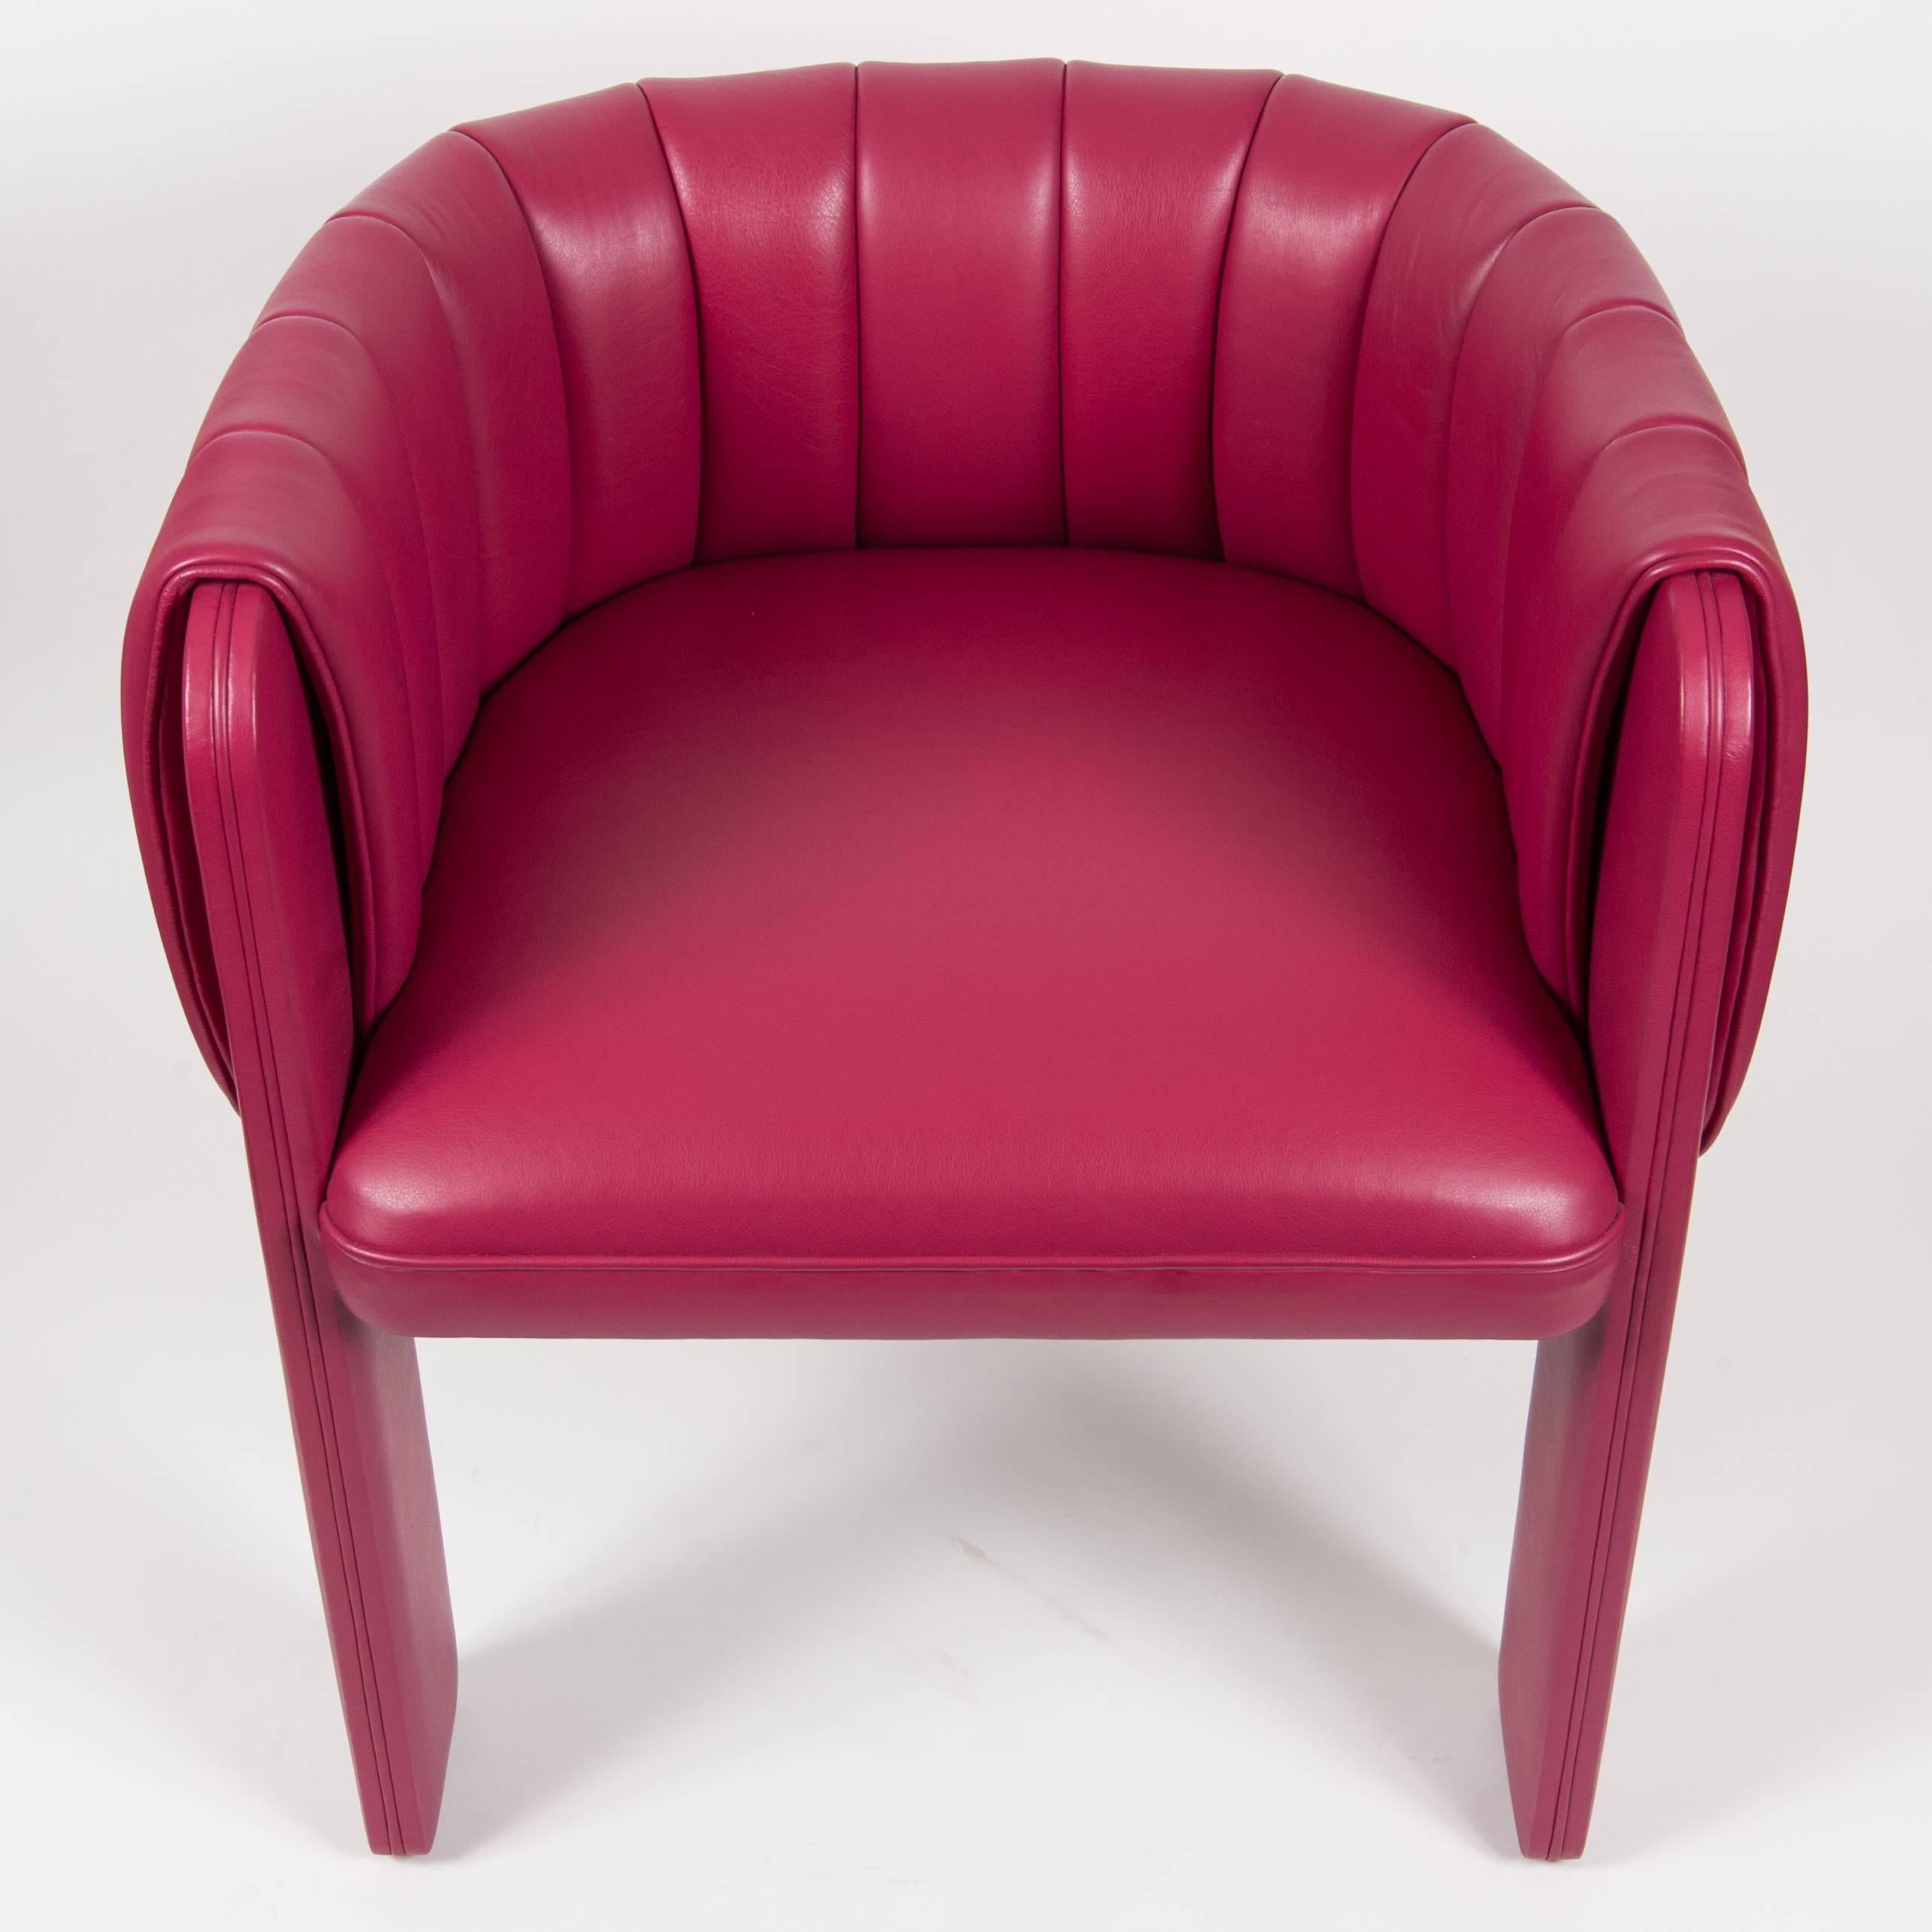 Martyn Lawrence Bullard's custom rive gauche dining chair
COL: 90 SF.